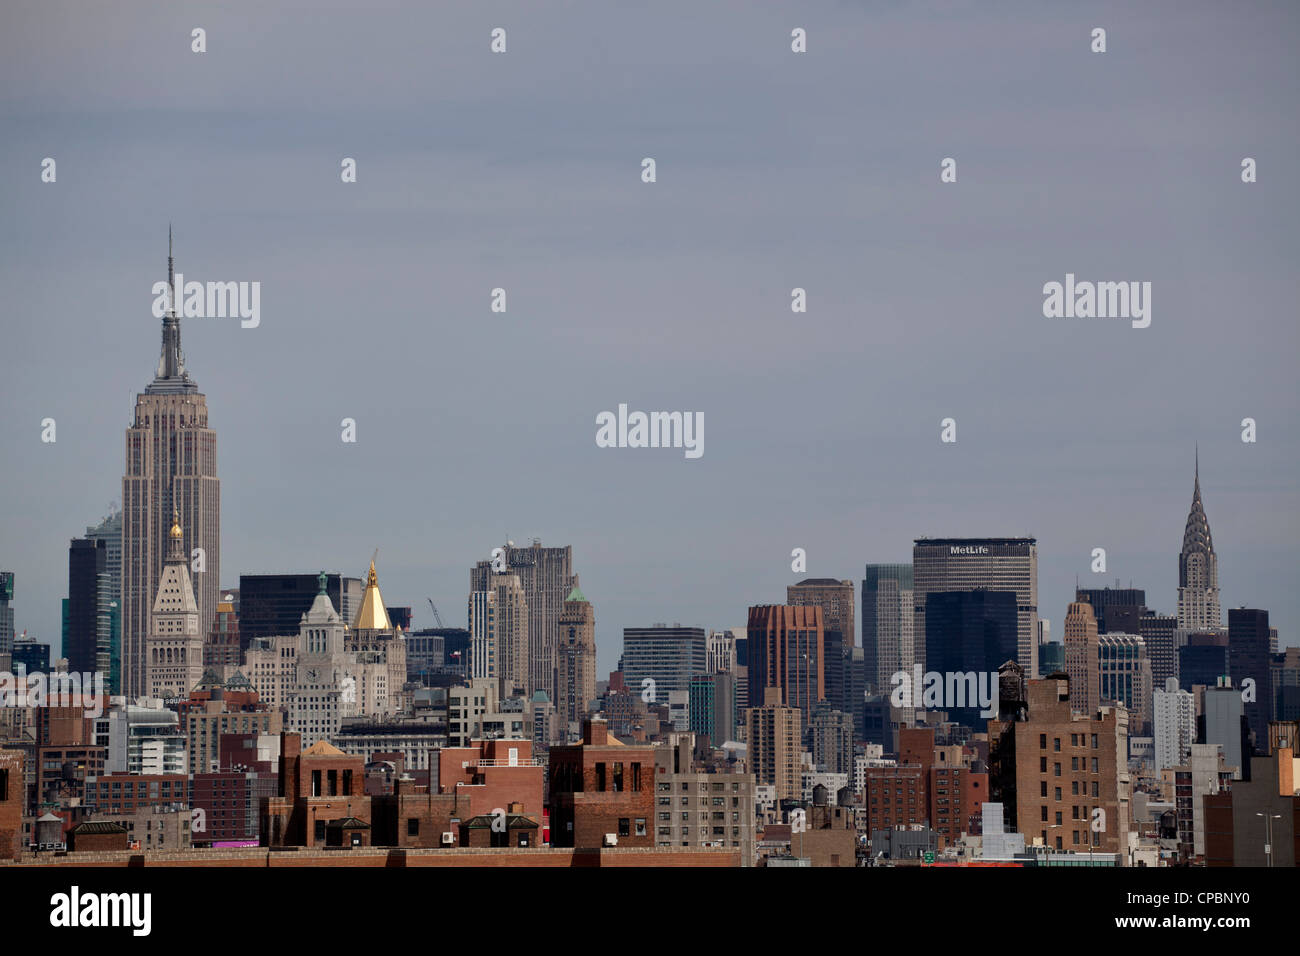 New York City Midtown skyline viewed from the Brooklyn Bridge, New York City. Stock Photo